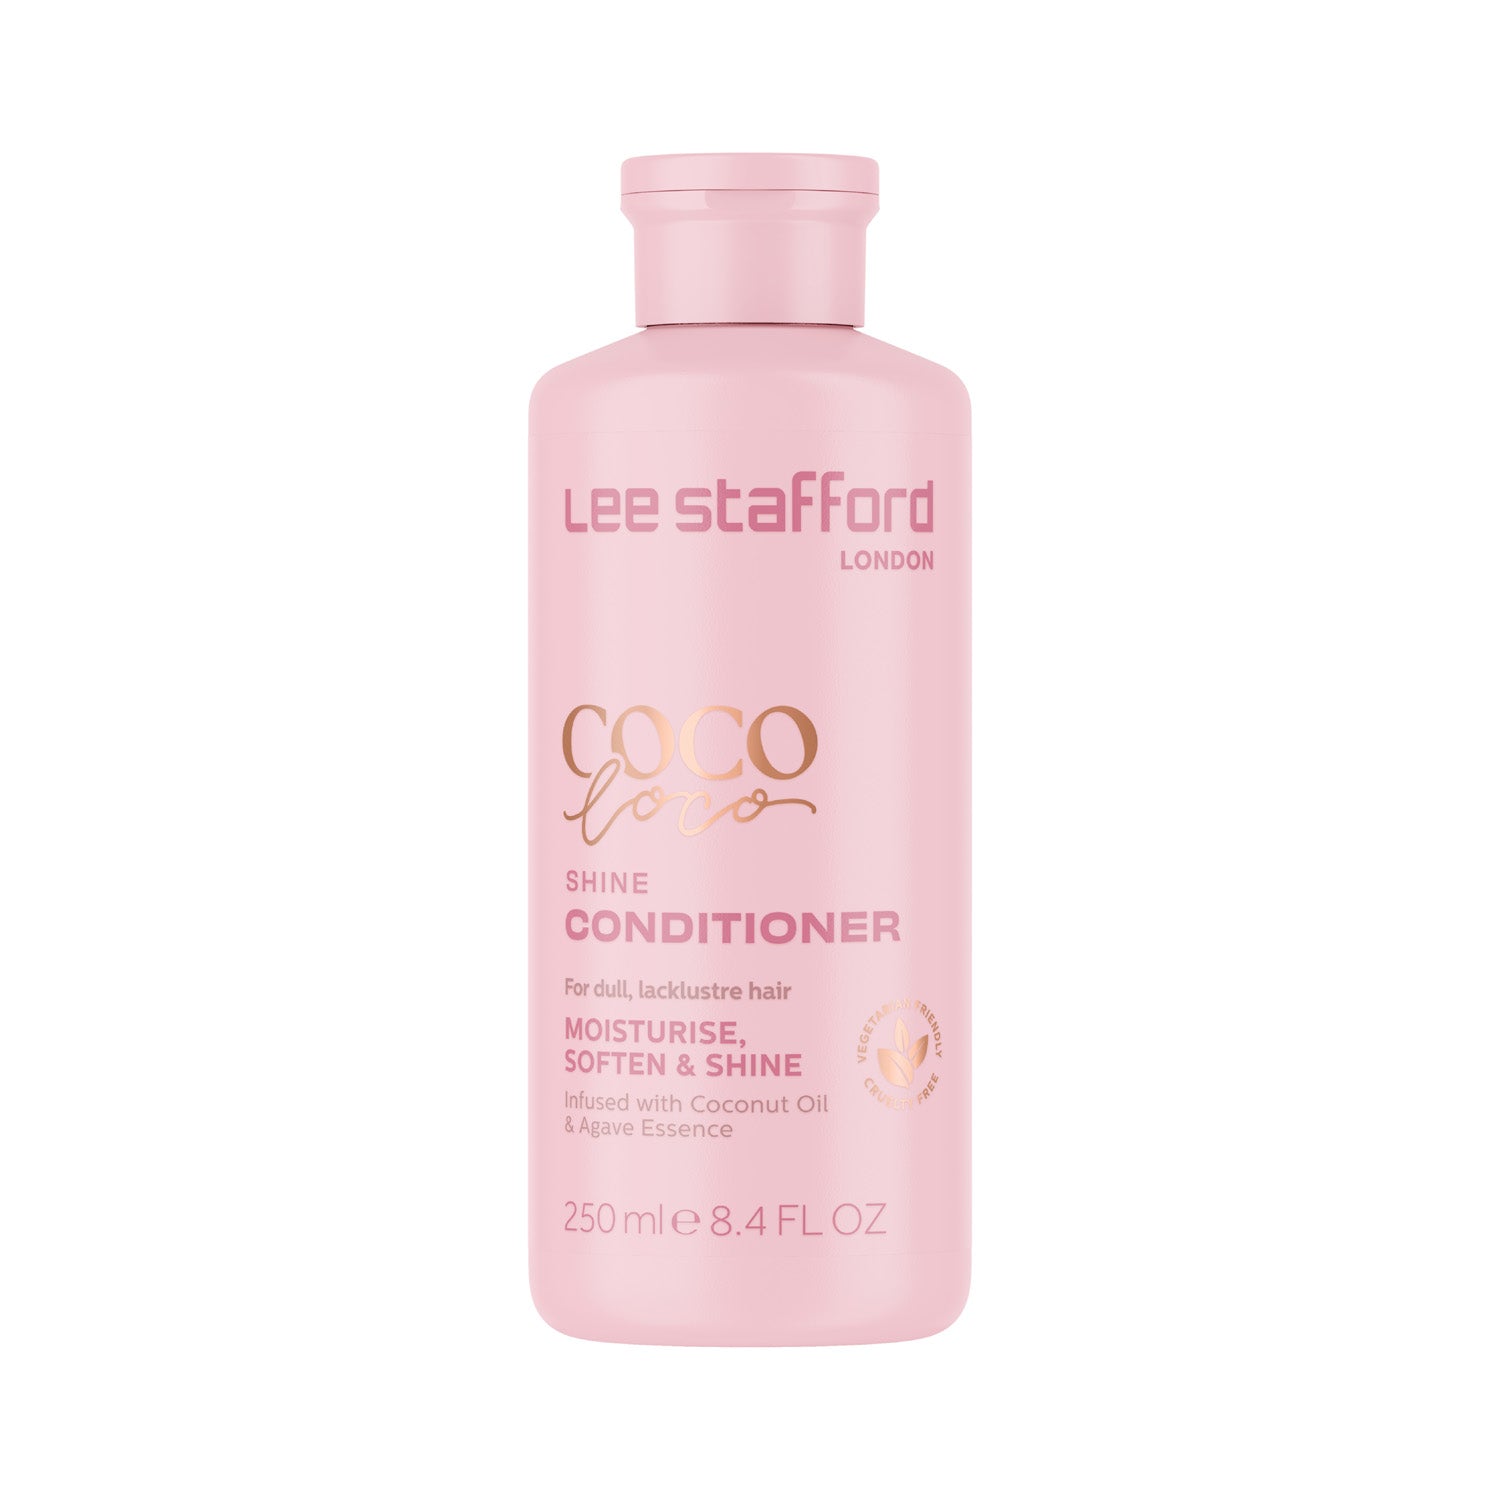 Lee Stafford Coco UK 250ml – Conditioner Shine Loco & Agave Lee Stafford